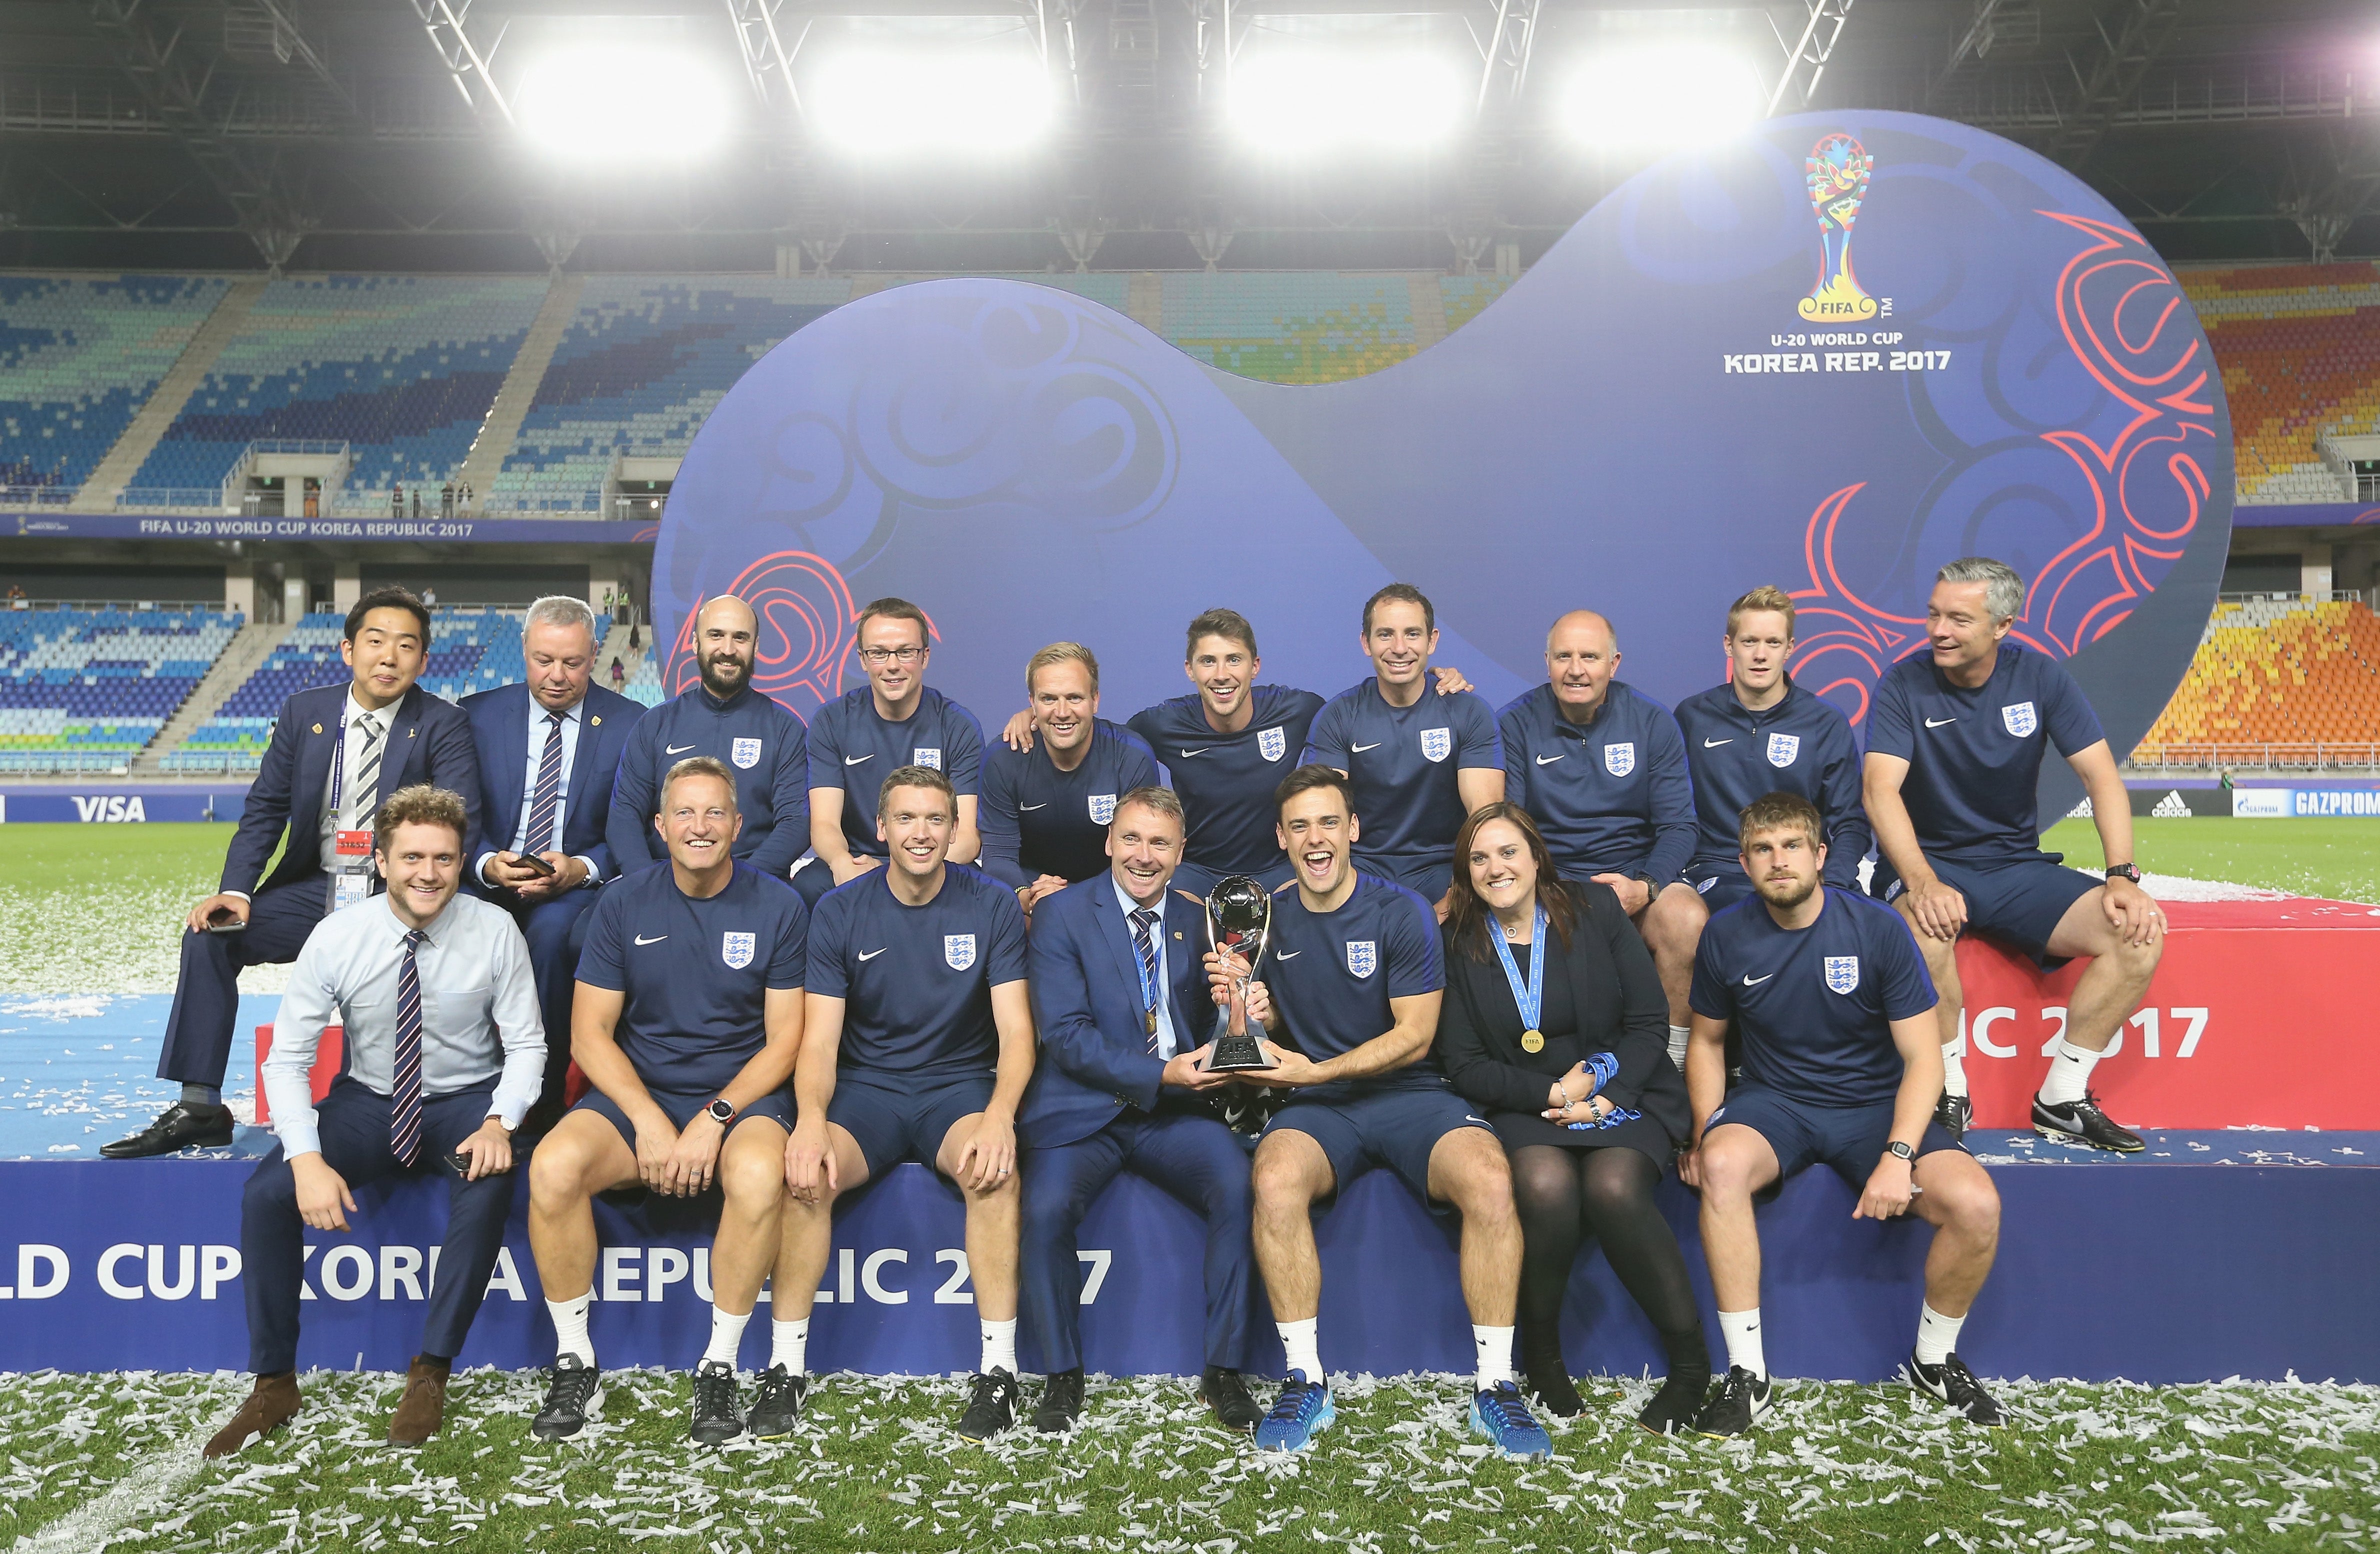 Meziane, alongside other England staff, celebrate with the U20 World Cup trophy